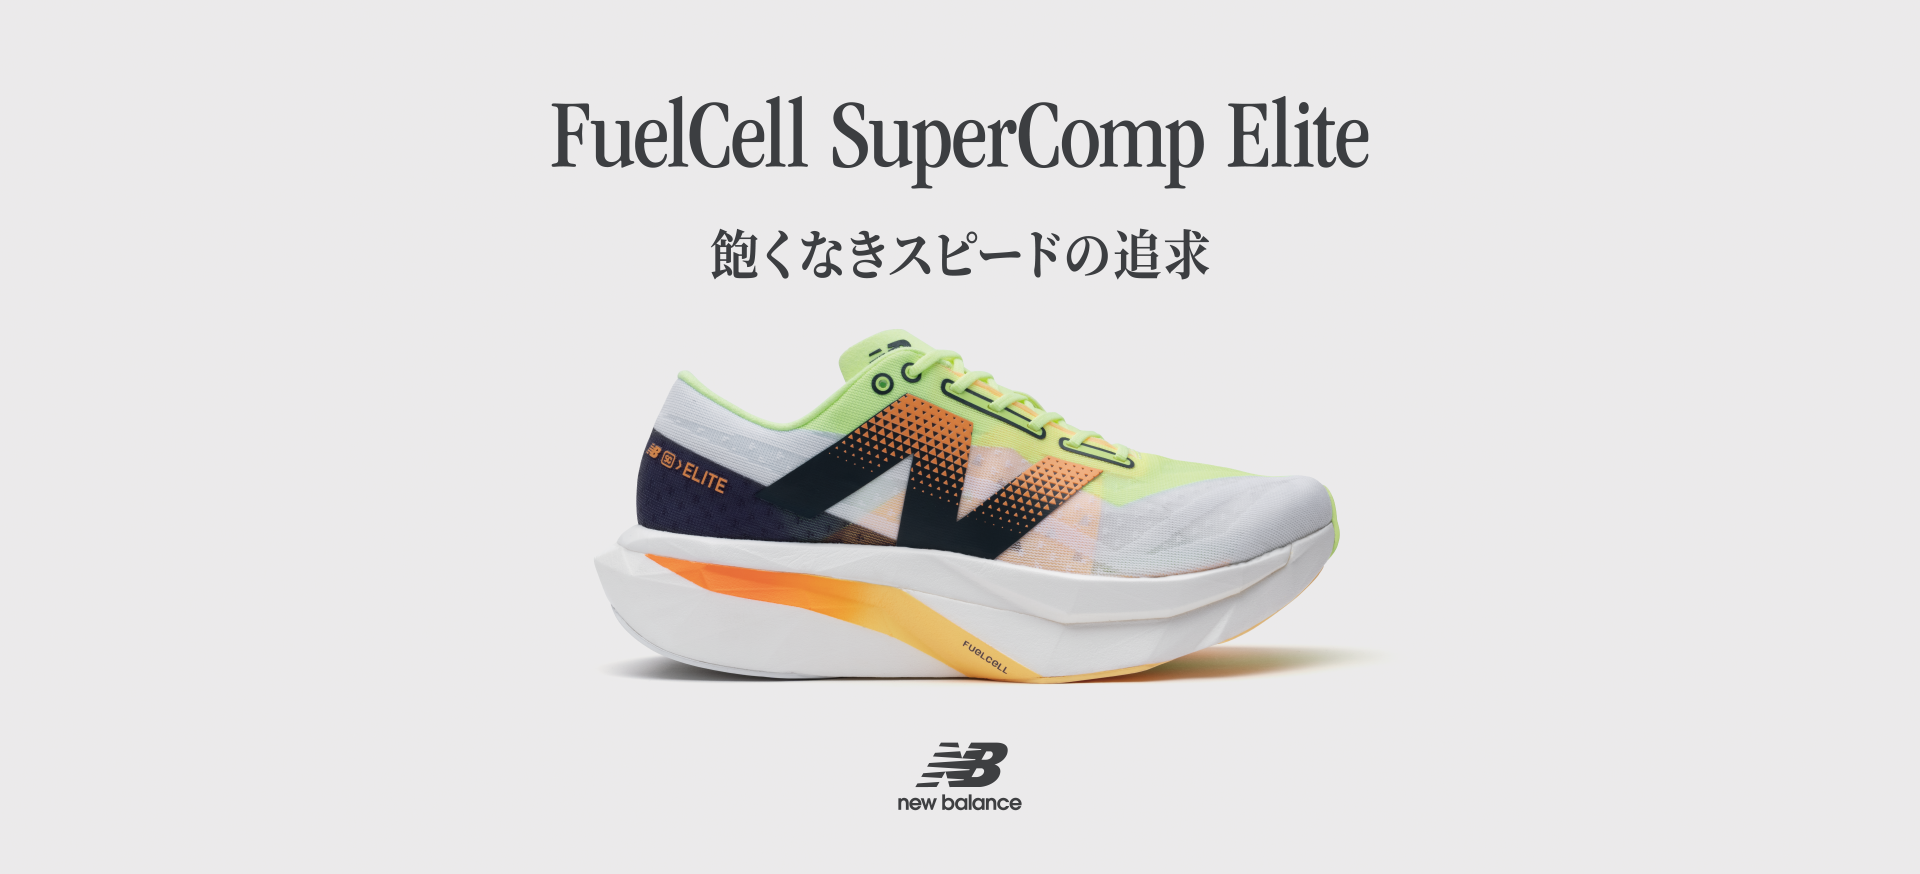 FuelCell SuperComp Elite OȂXs[h̒ǋ